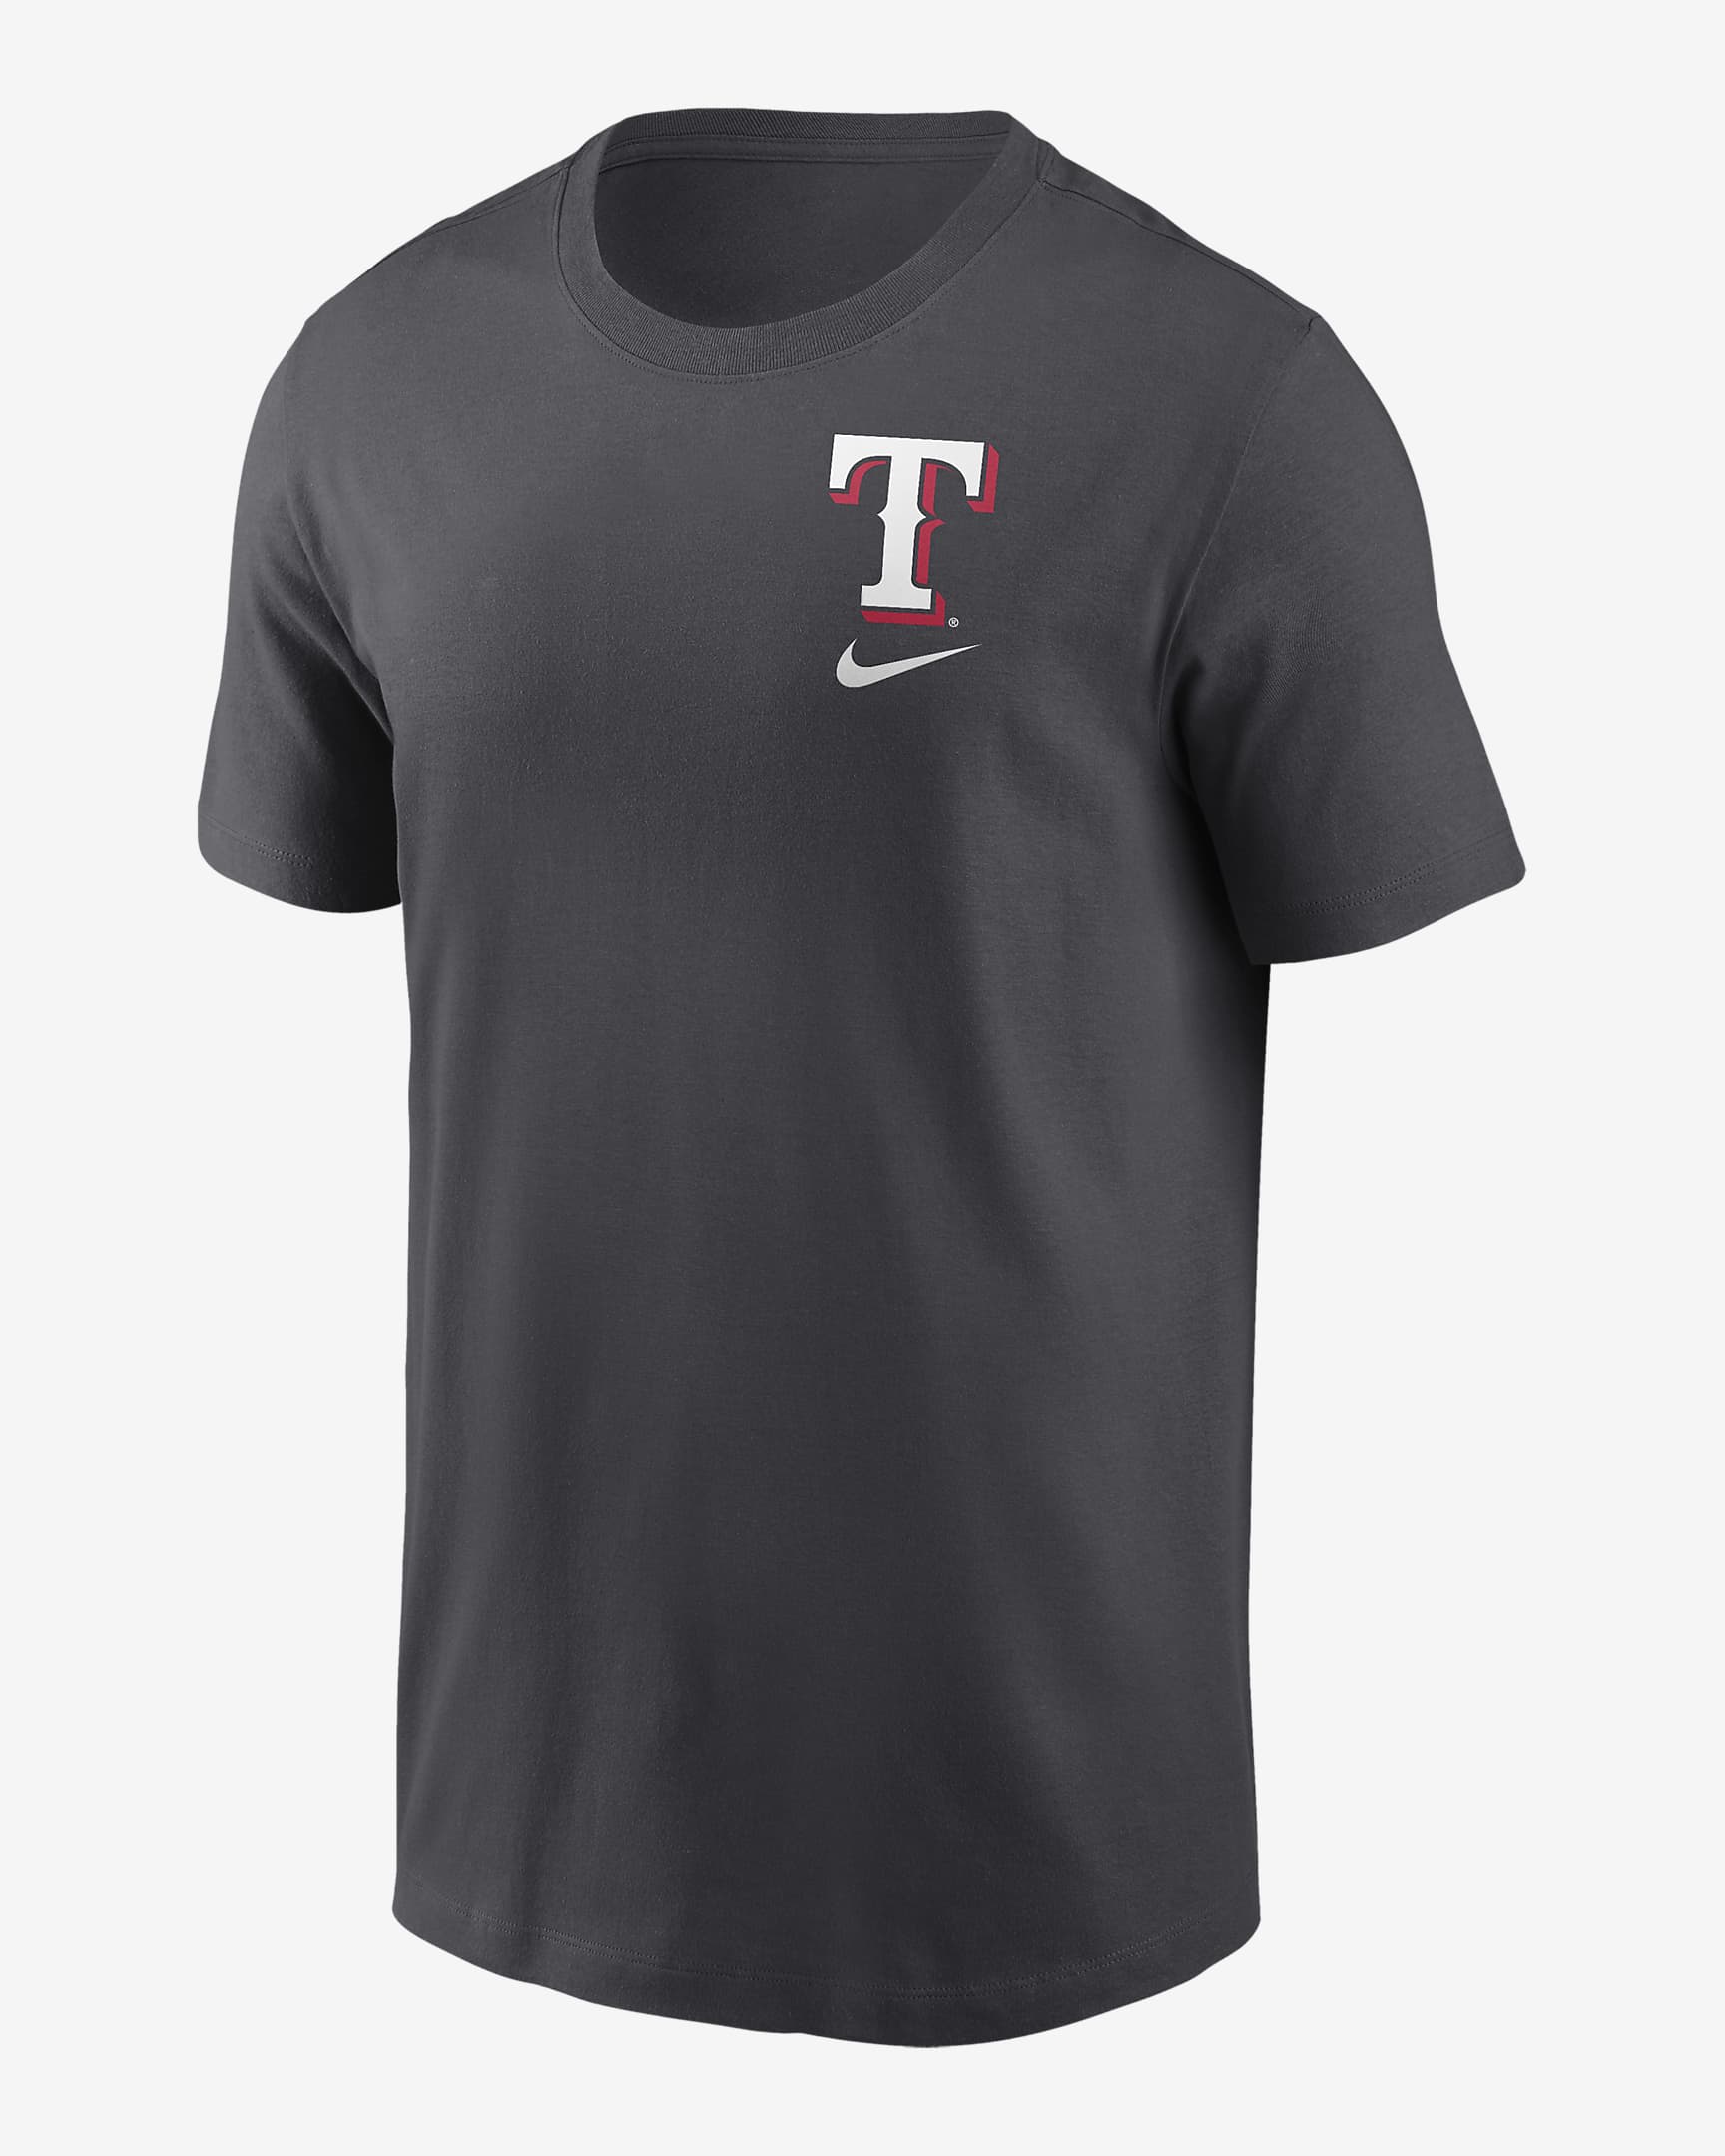 Playera Nike de la MLB para hombre Texas Rangers Logo Sketch Bar. Nike.com